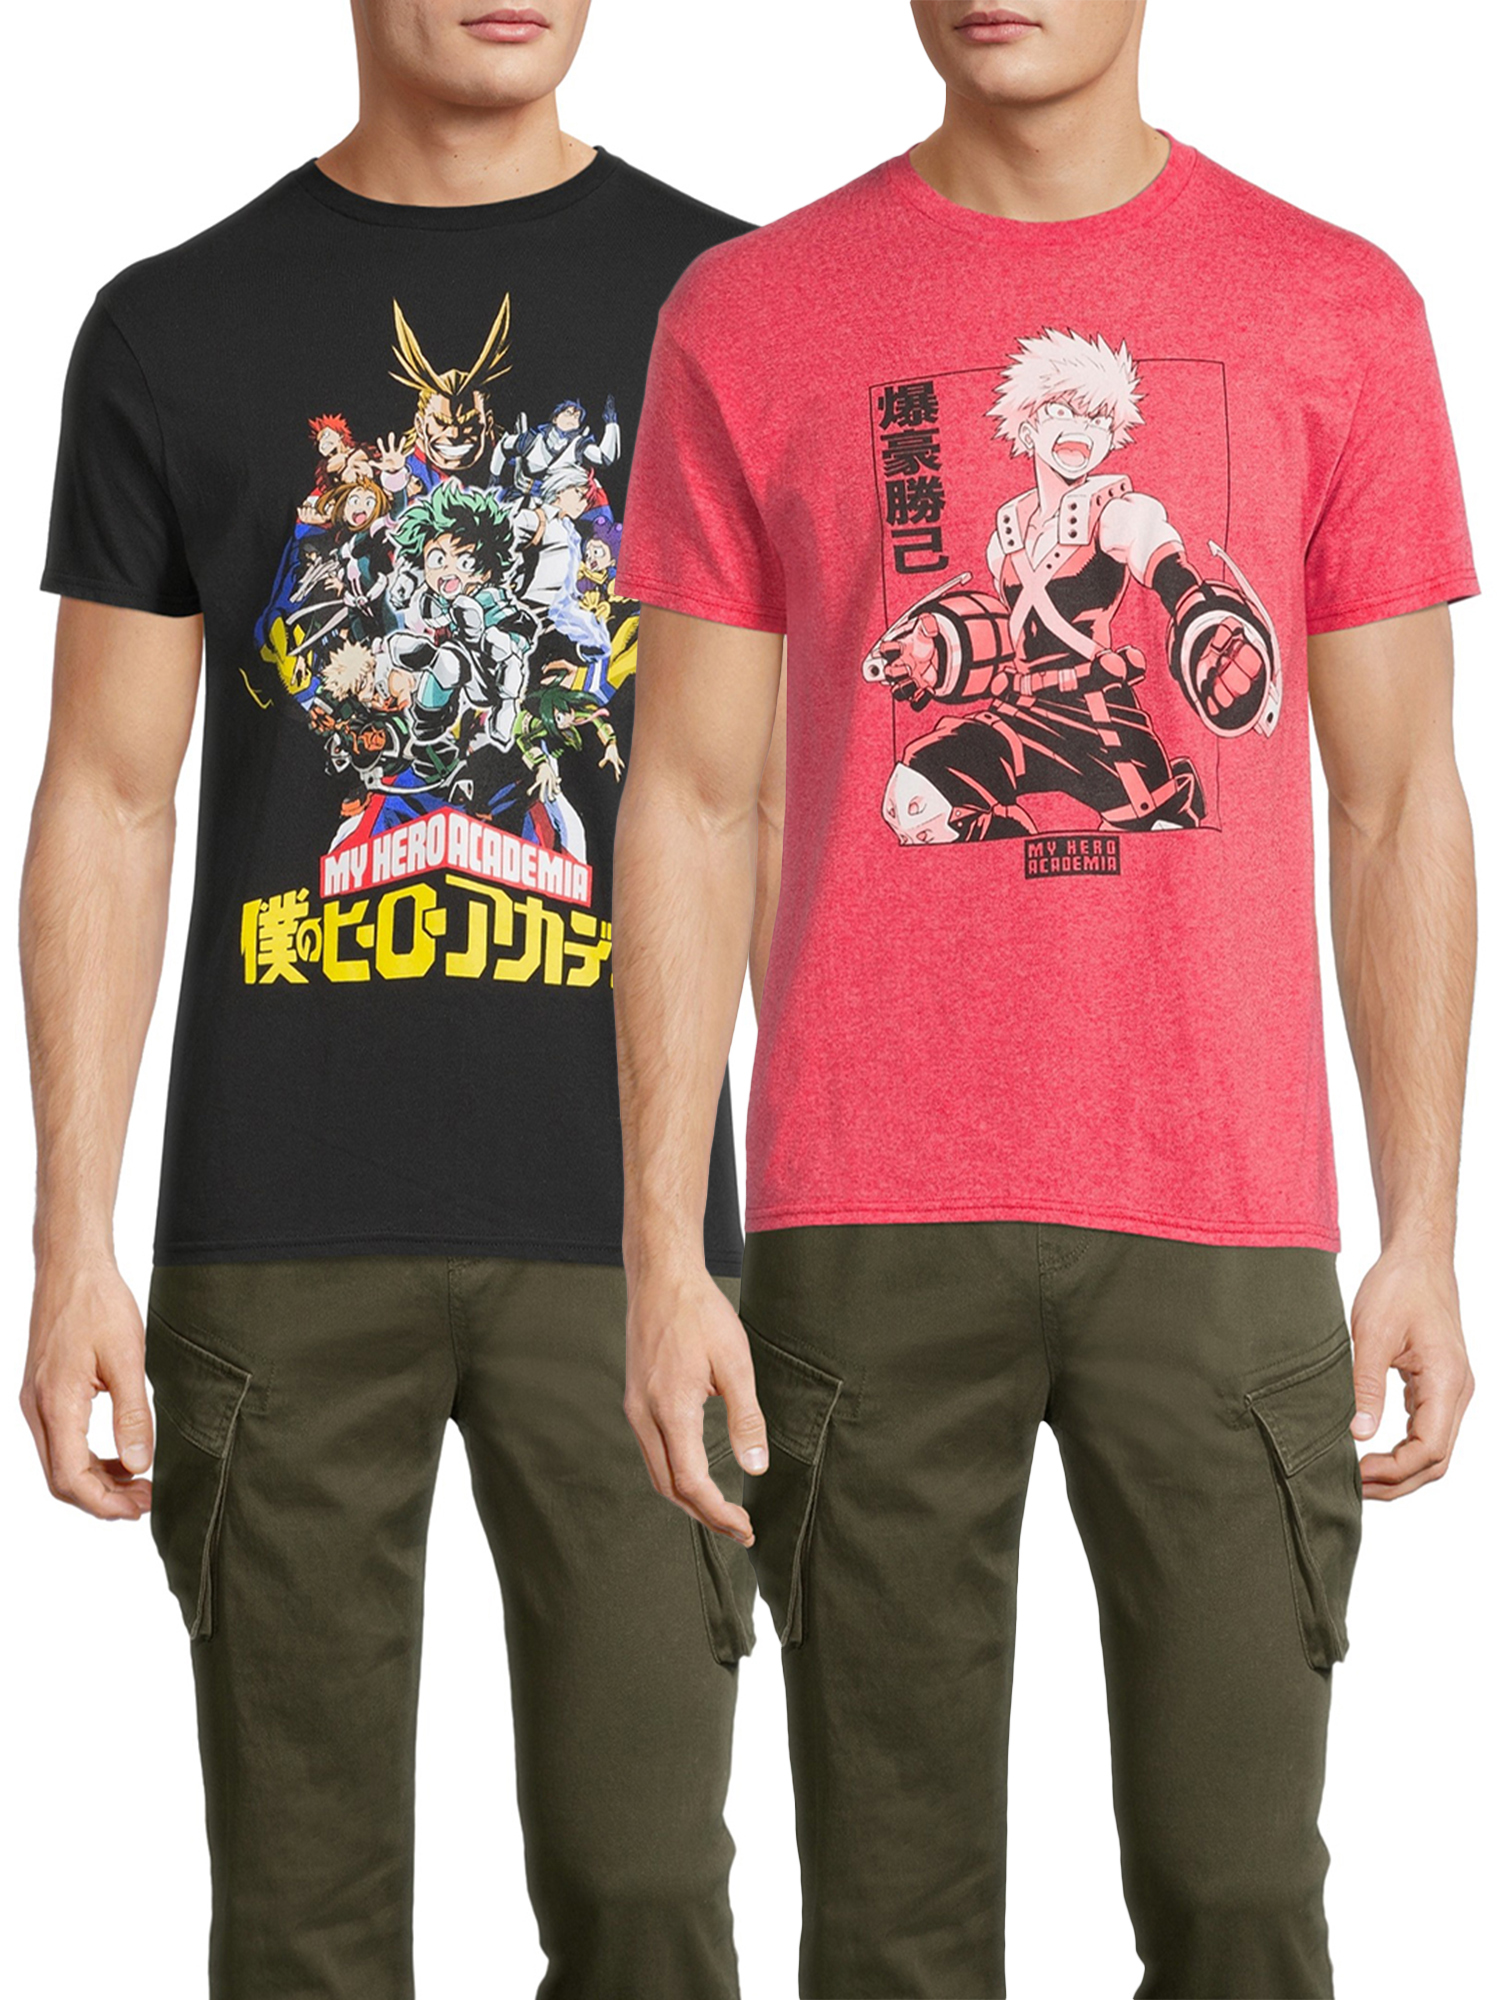 My Hero Academia Men's & Big Men's Anime Graphic Tees Shirts, 2-Pack, Sizes S-3XL, My Hero Academia Mens T-Shirts - image 1 of 6